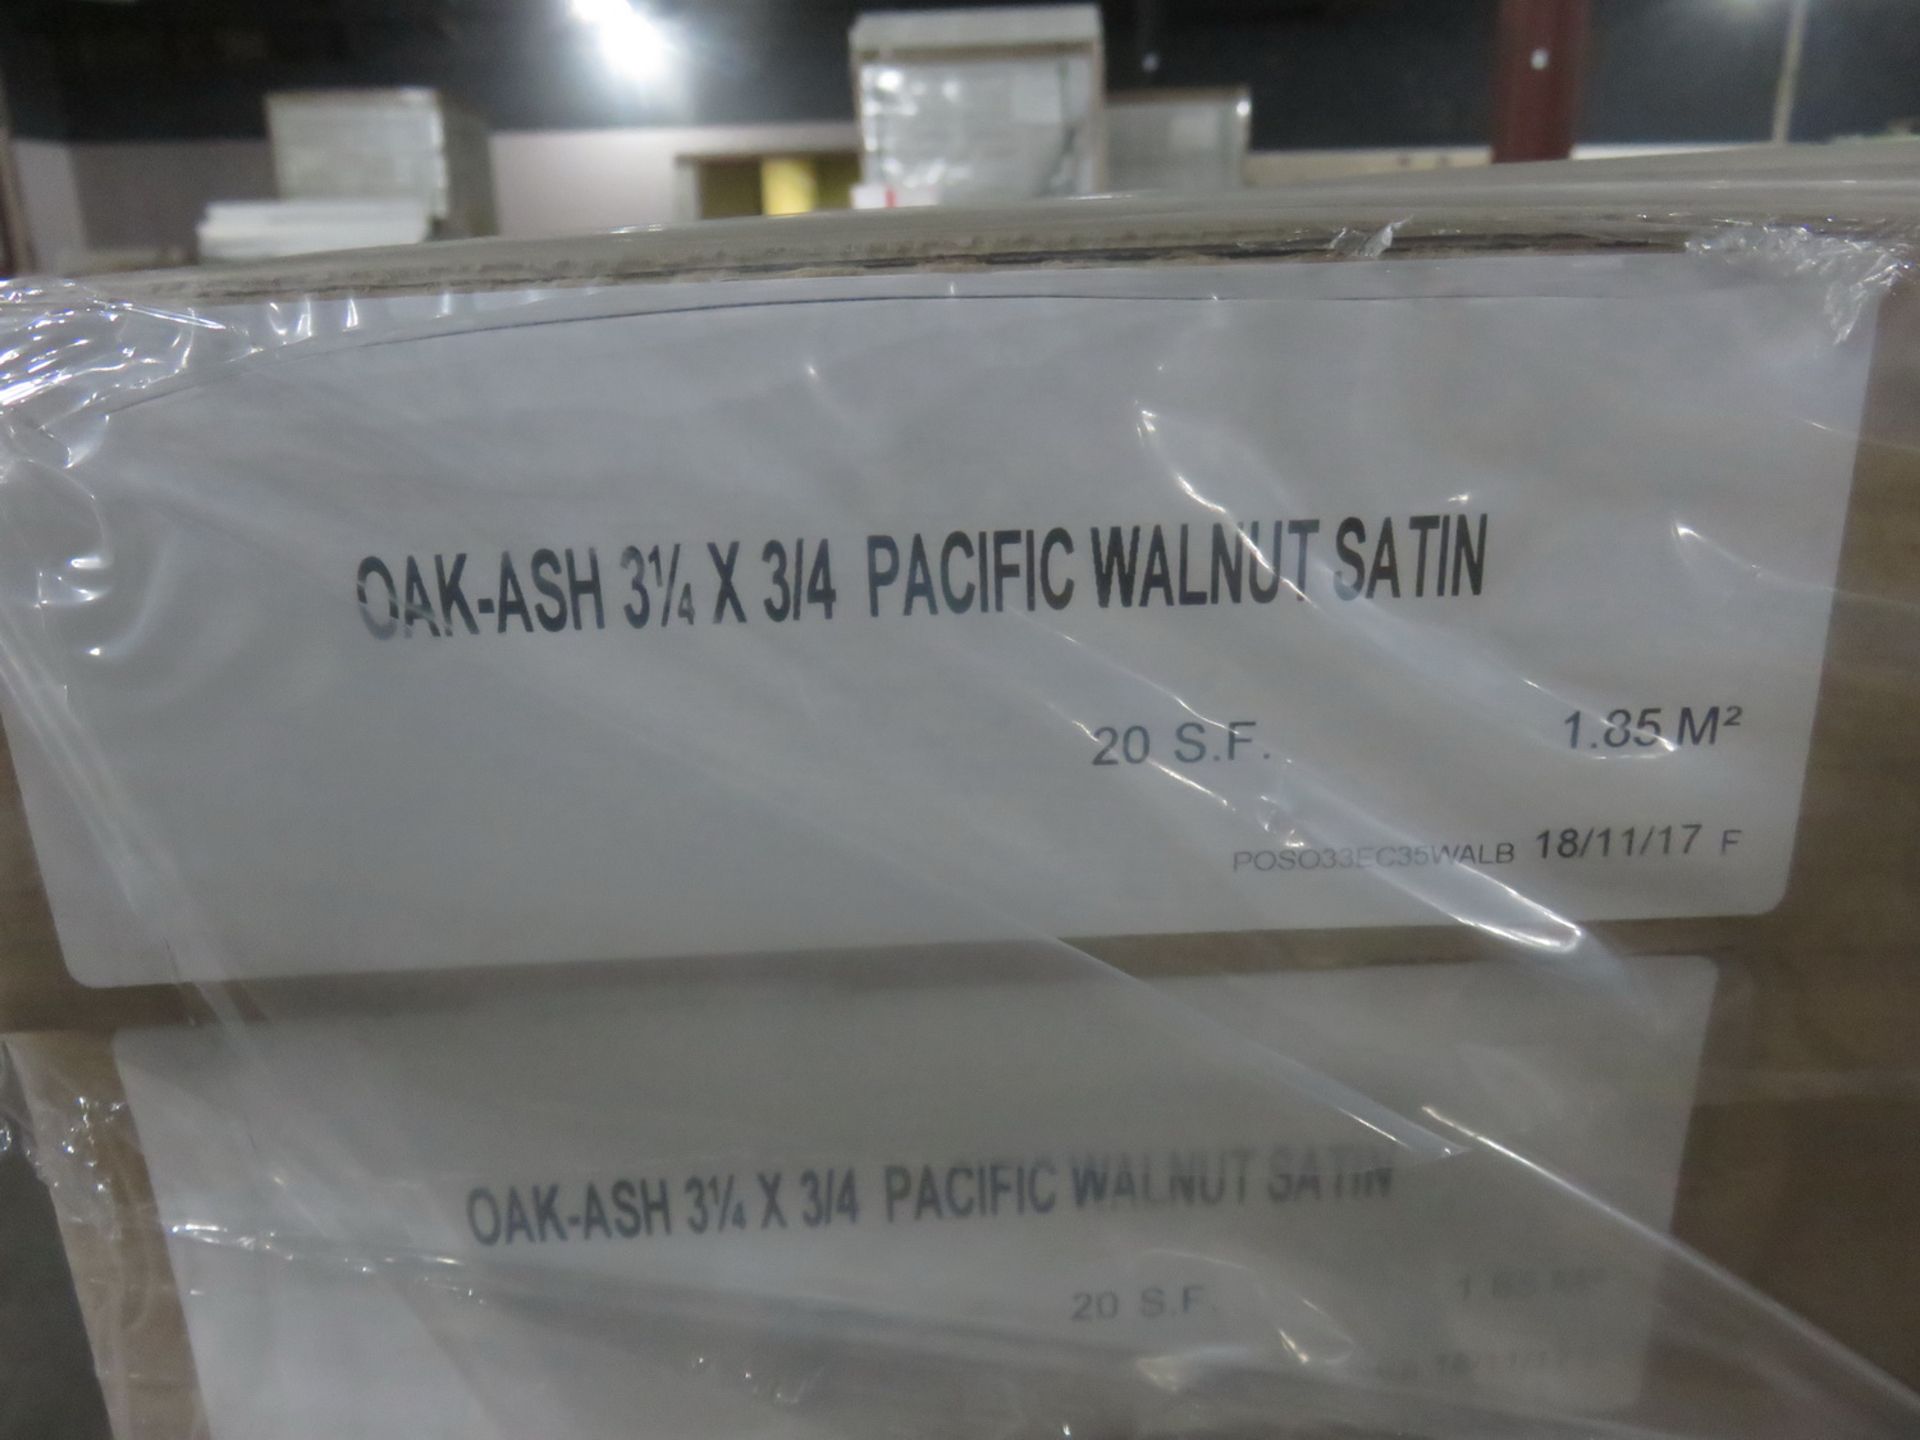 BOXES - OAK-ASH 3 1/4 X 3/4" X RL PACIFIC WALNUT SATIN HARDWOOD FLOORING (20 SQFT / BOX) - Image 2 of 3